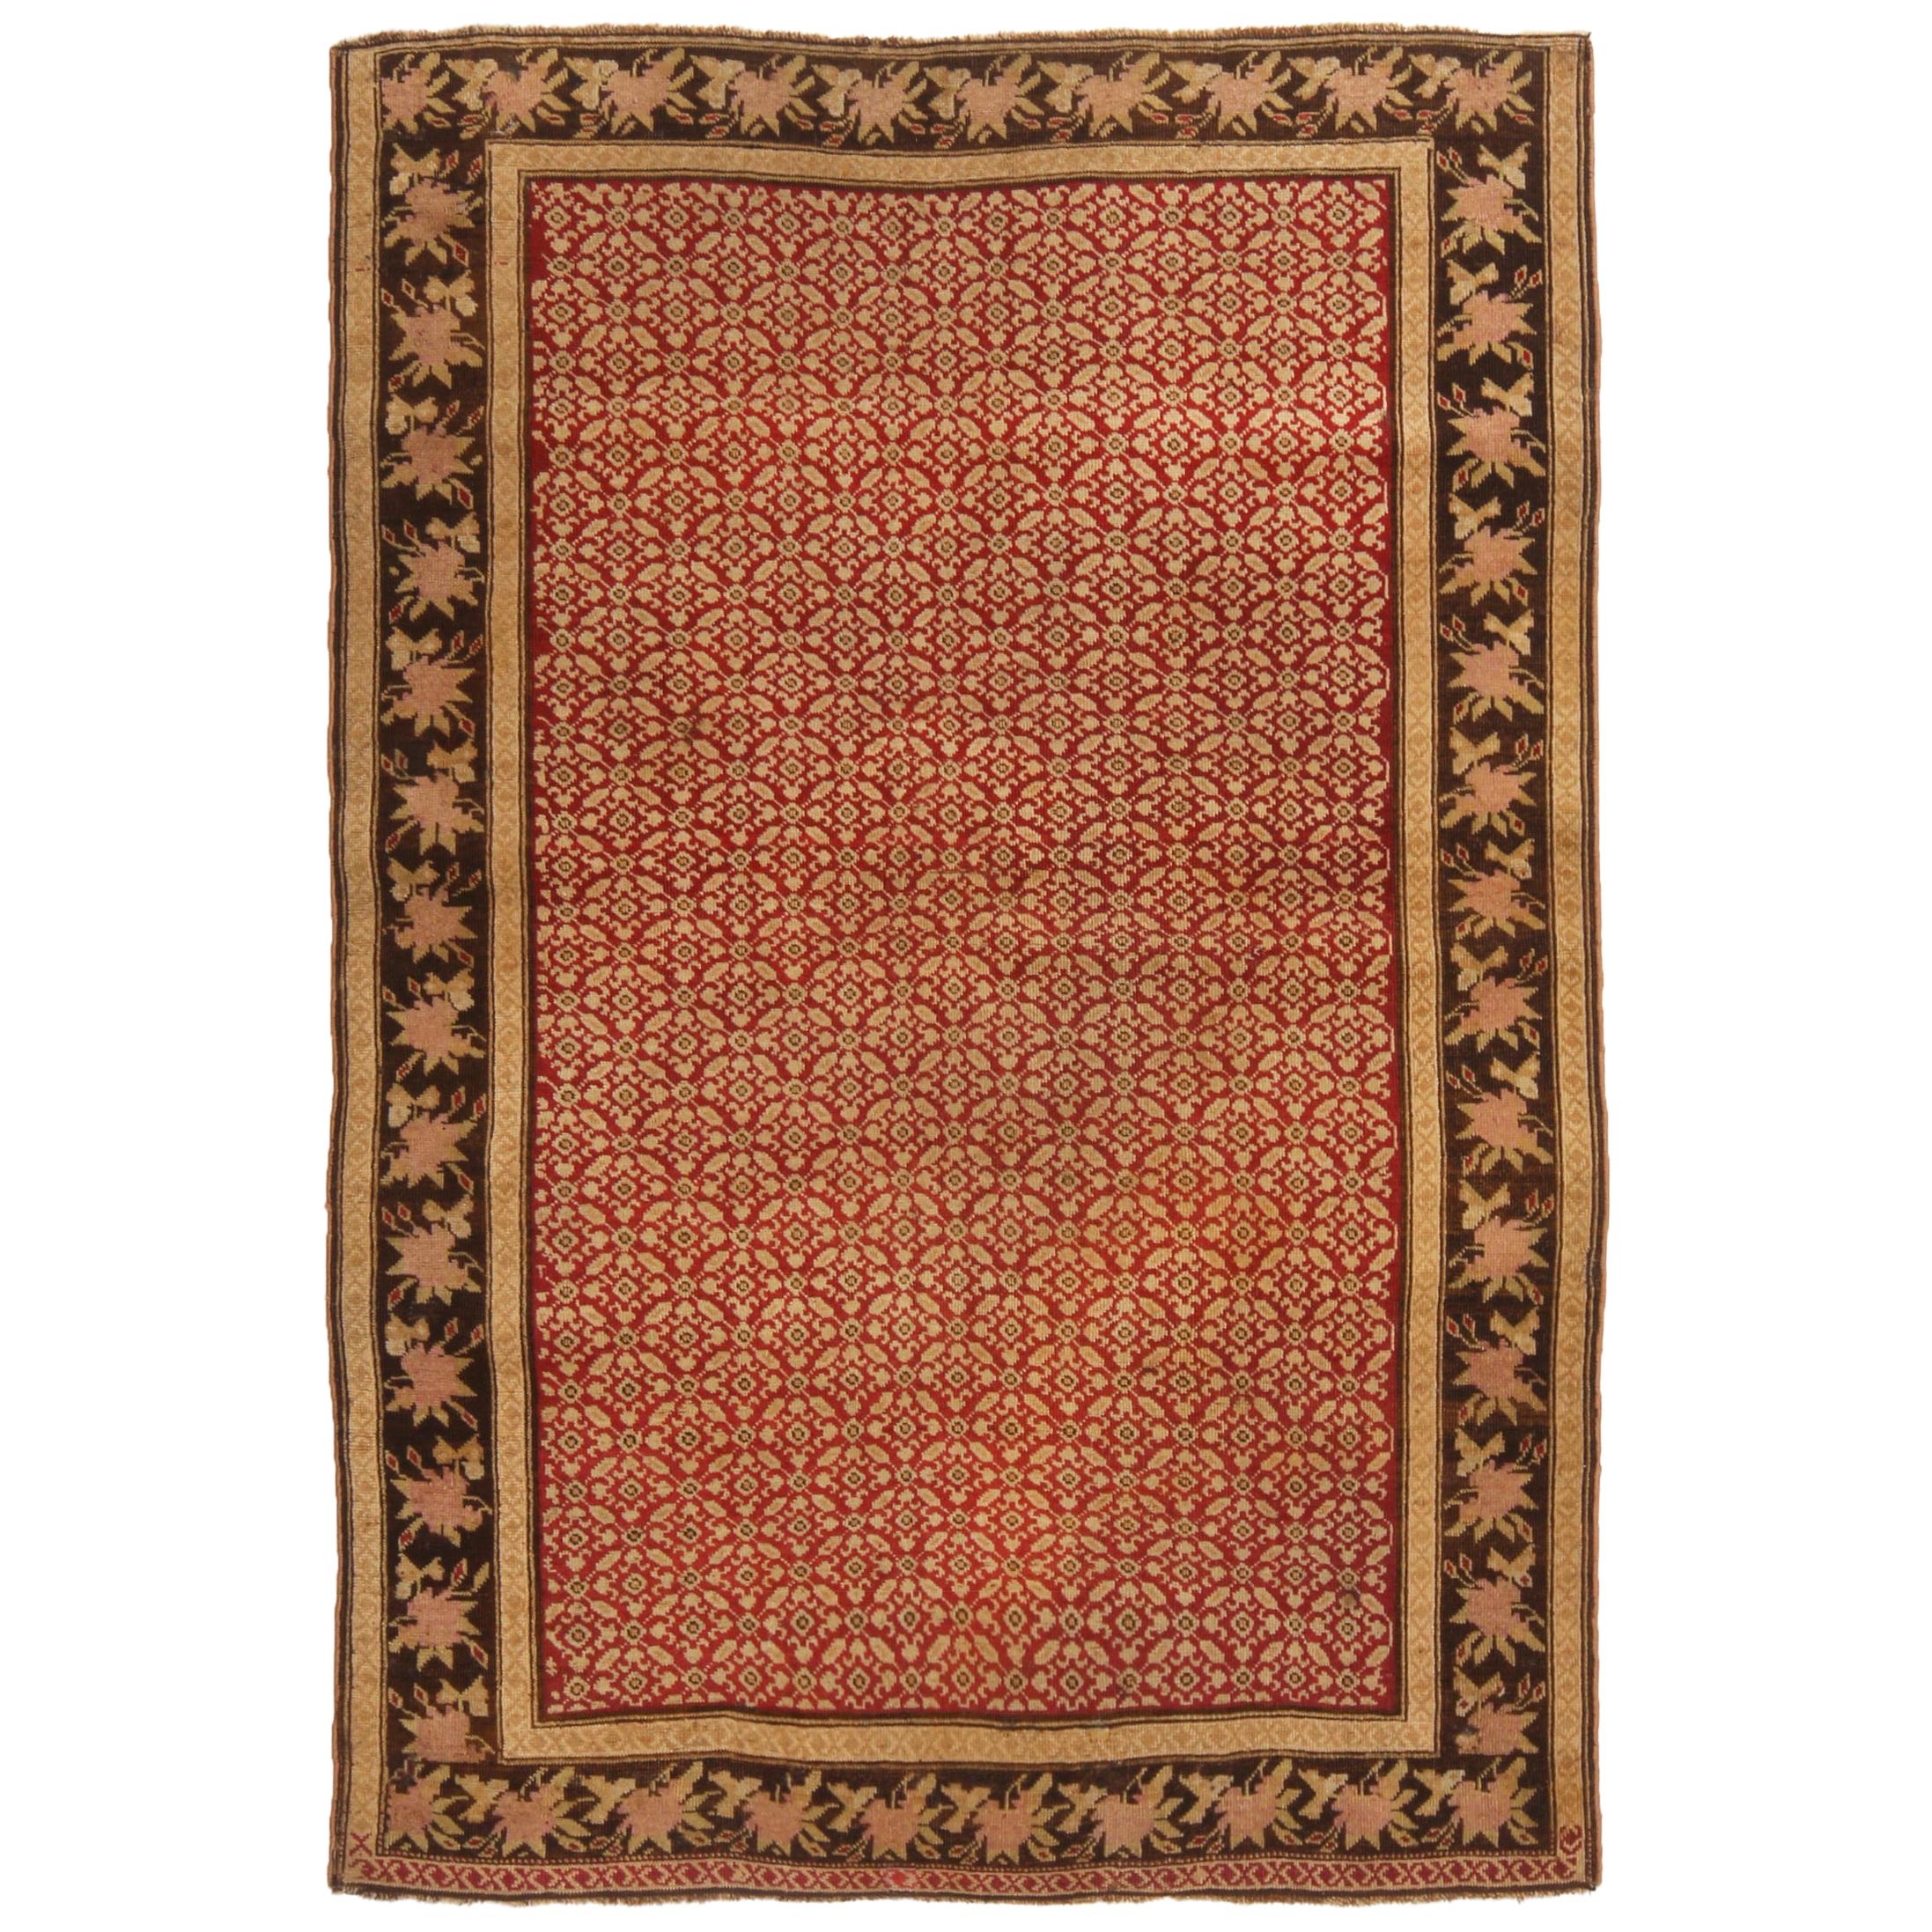 Tapis traditionnel antique Karabagh rouge et beige géométrique de Rug & Kilim